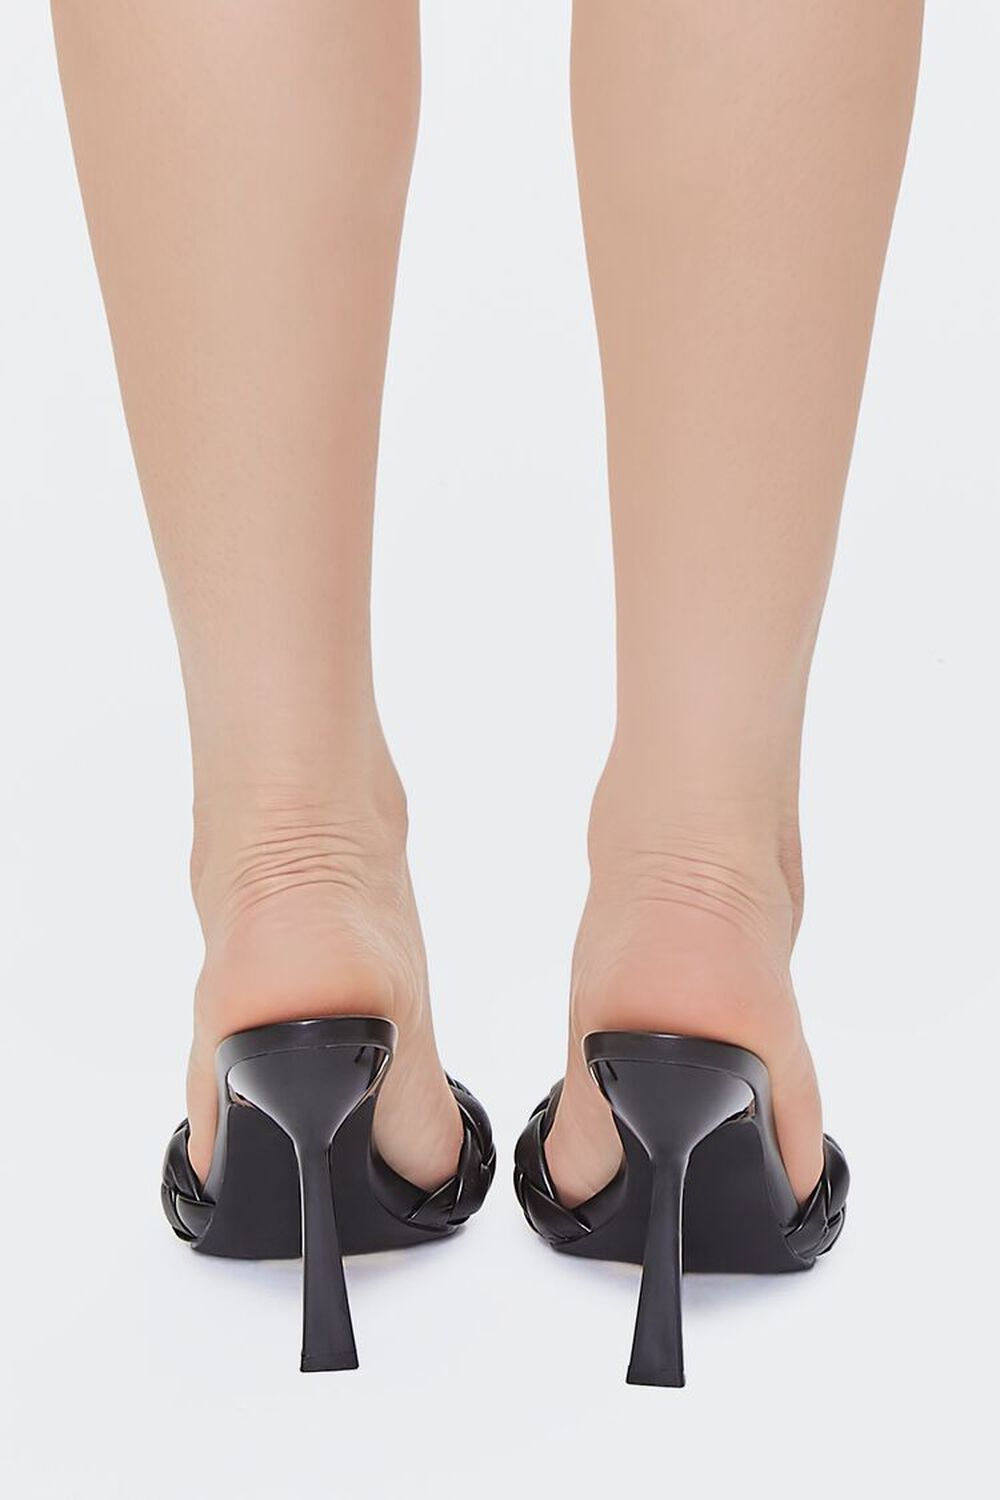 BLACK Braided Slip-On Stiletto Heels, image 3